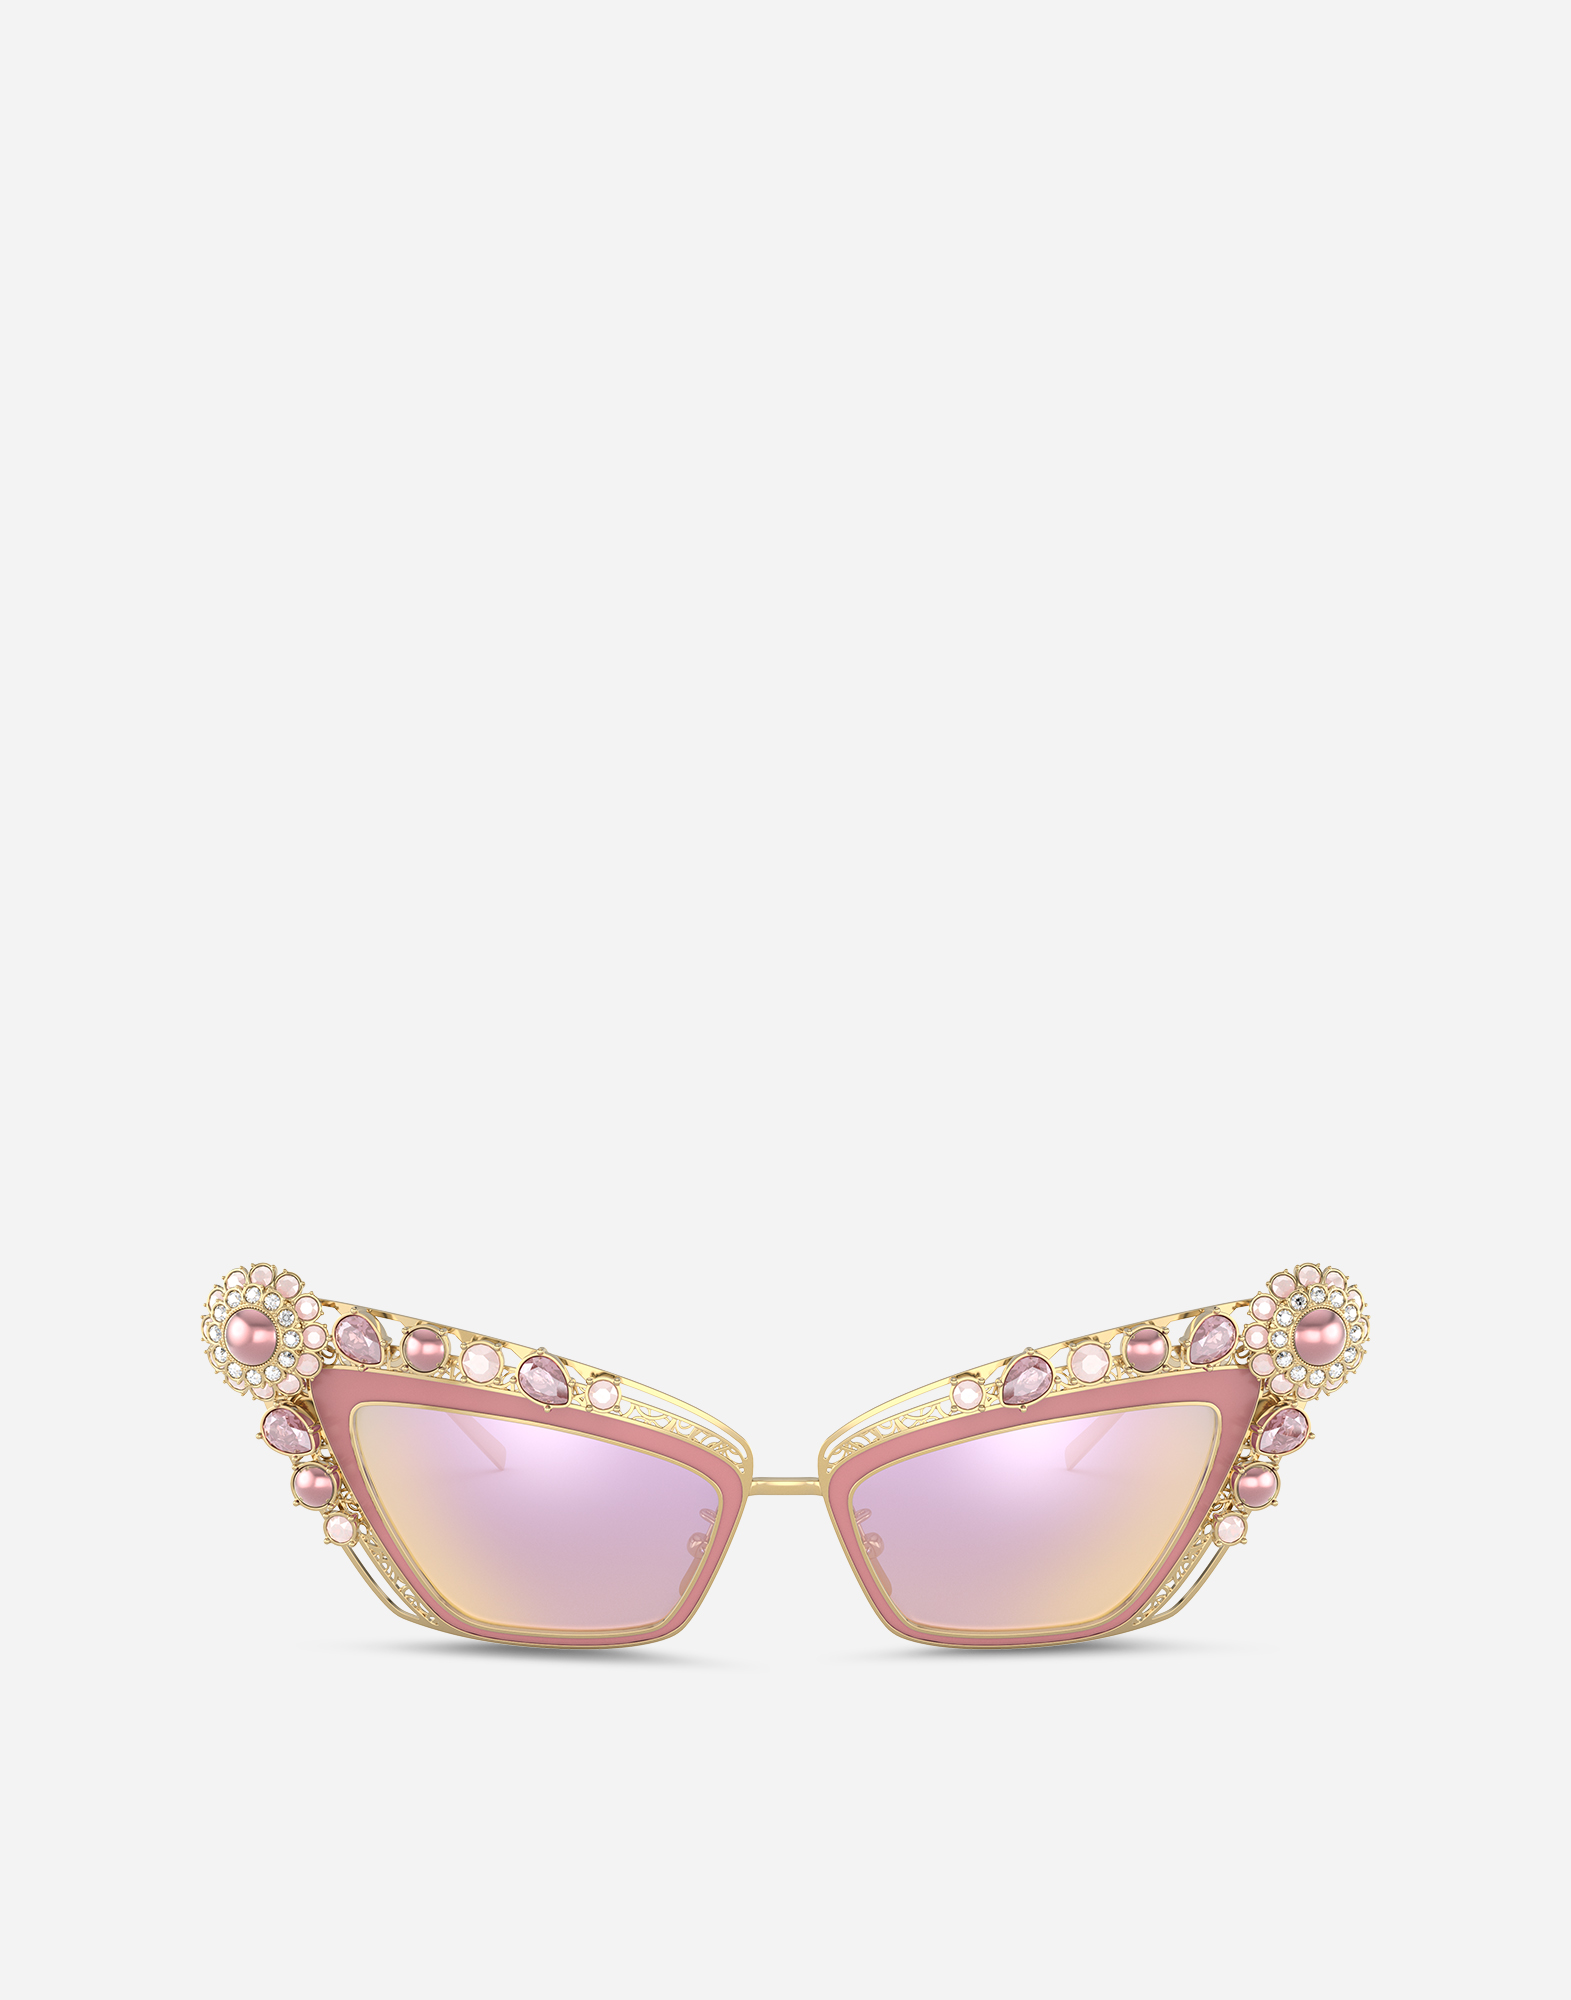 Dolce & Gabbana Christmas Sunglasses